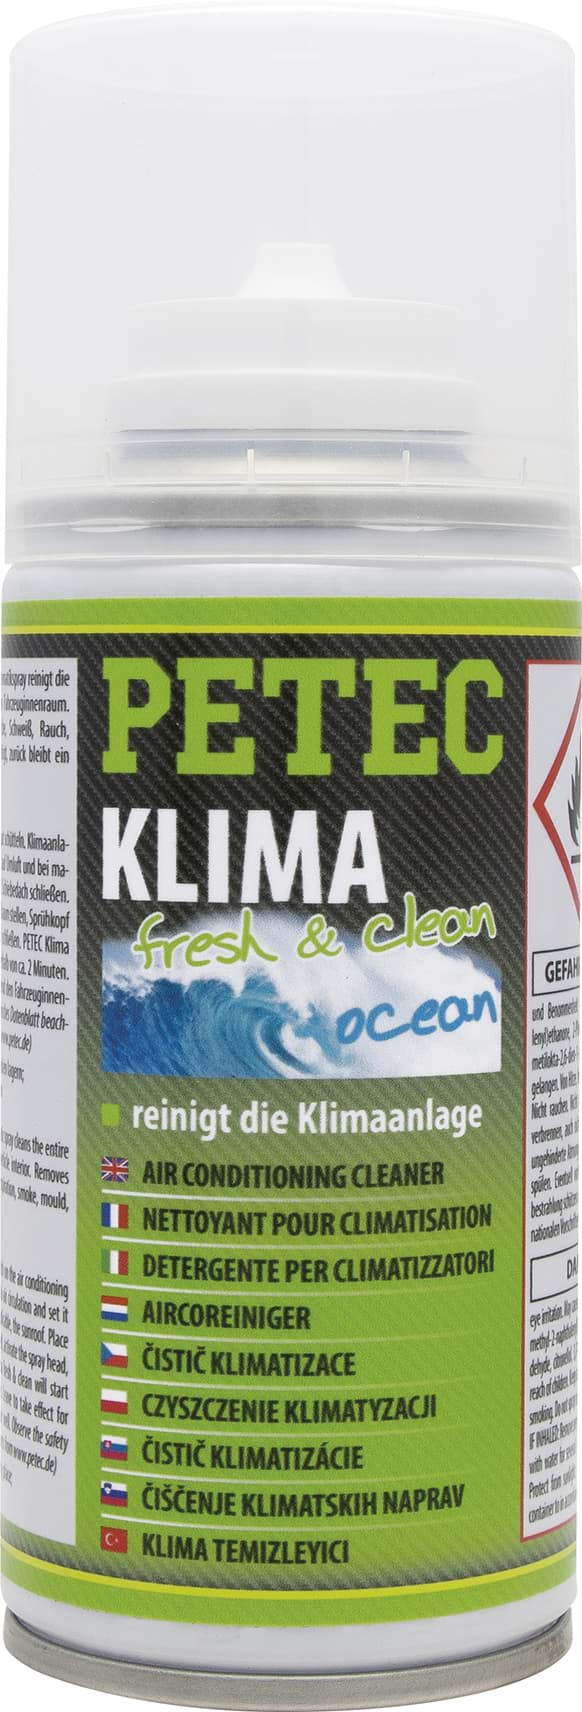 Picture of Petec KLIMA FRESH & CLEAN OCEAN AUTOMATIKSPRAY